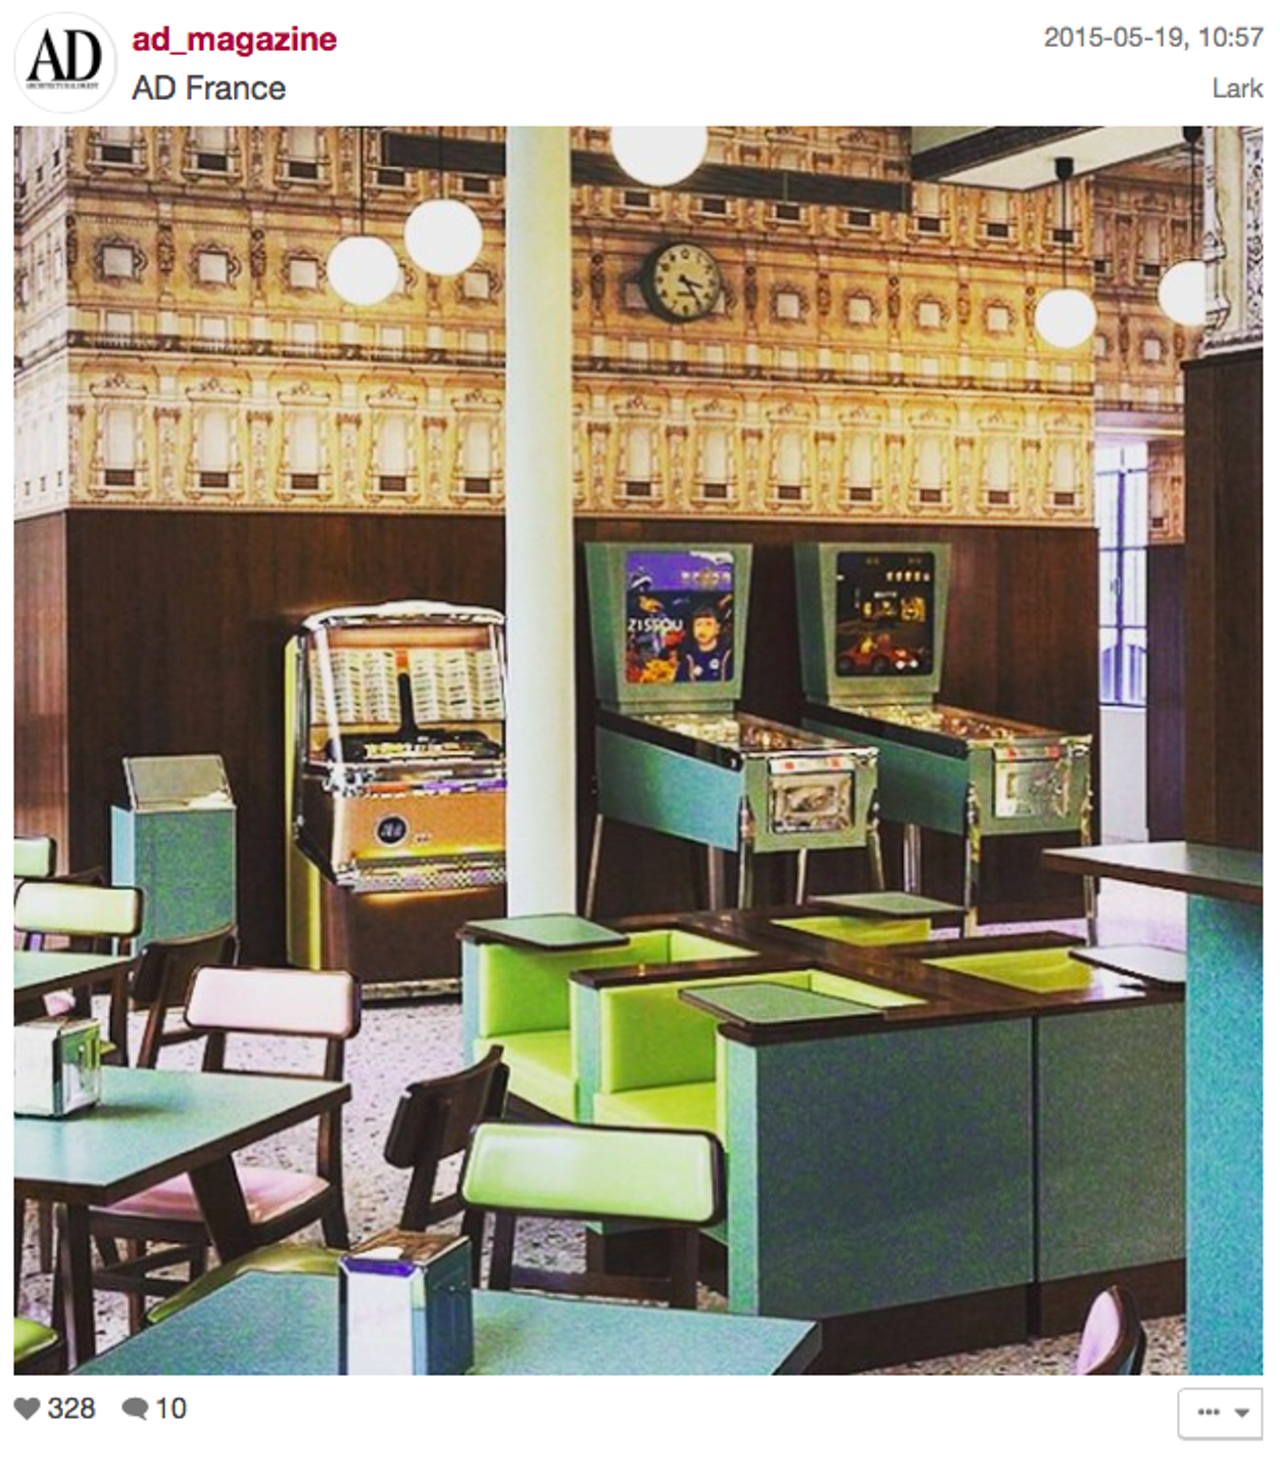 Square club chairs, a jukebox, and custom vintage pinball machines.